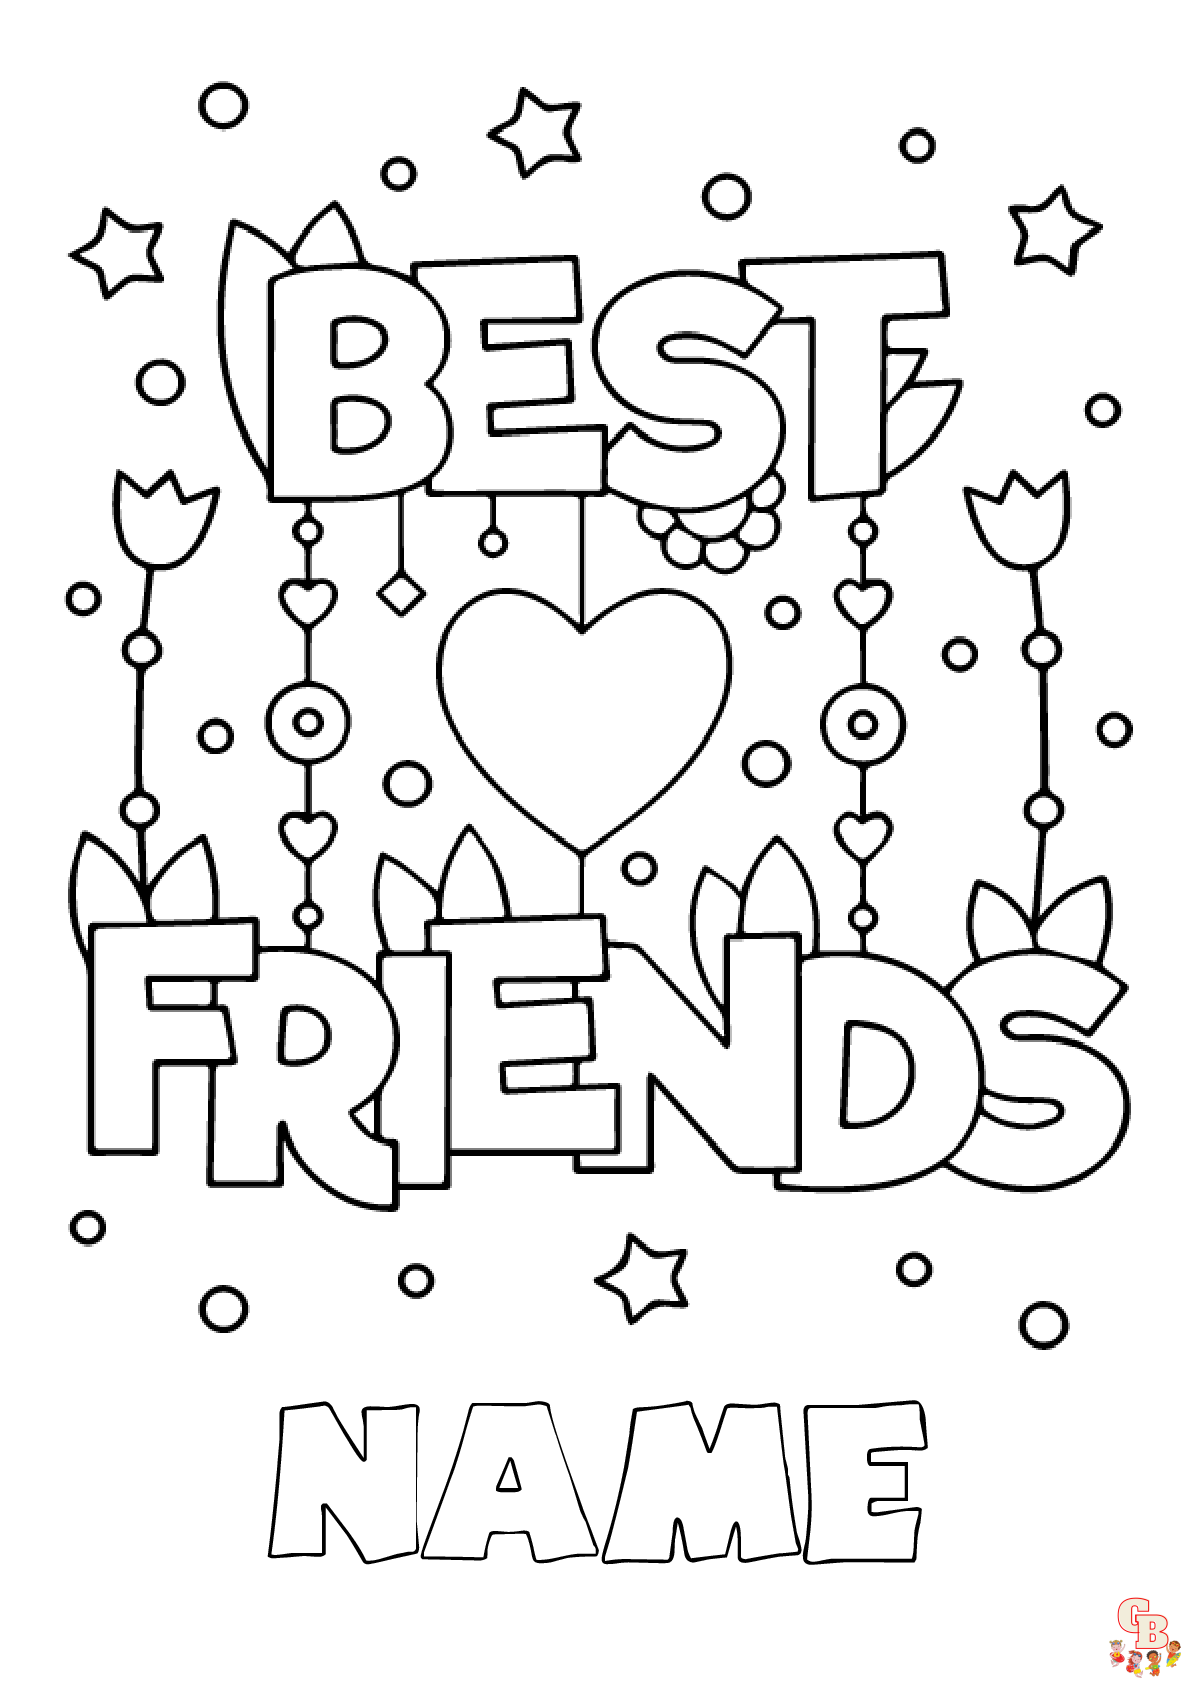 Best Friend Coloring Pages 1